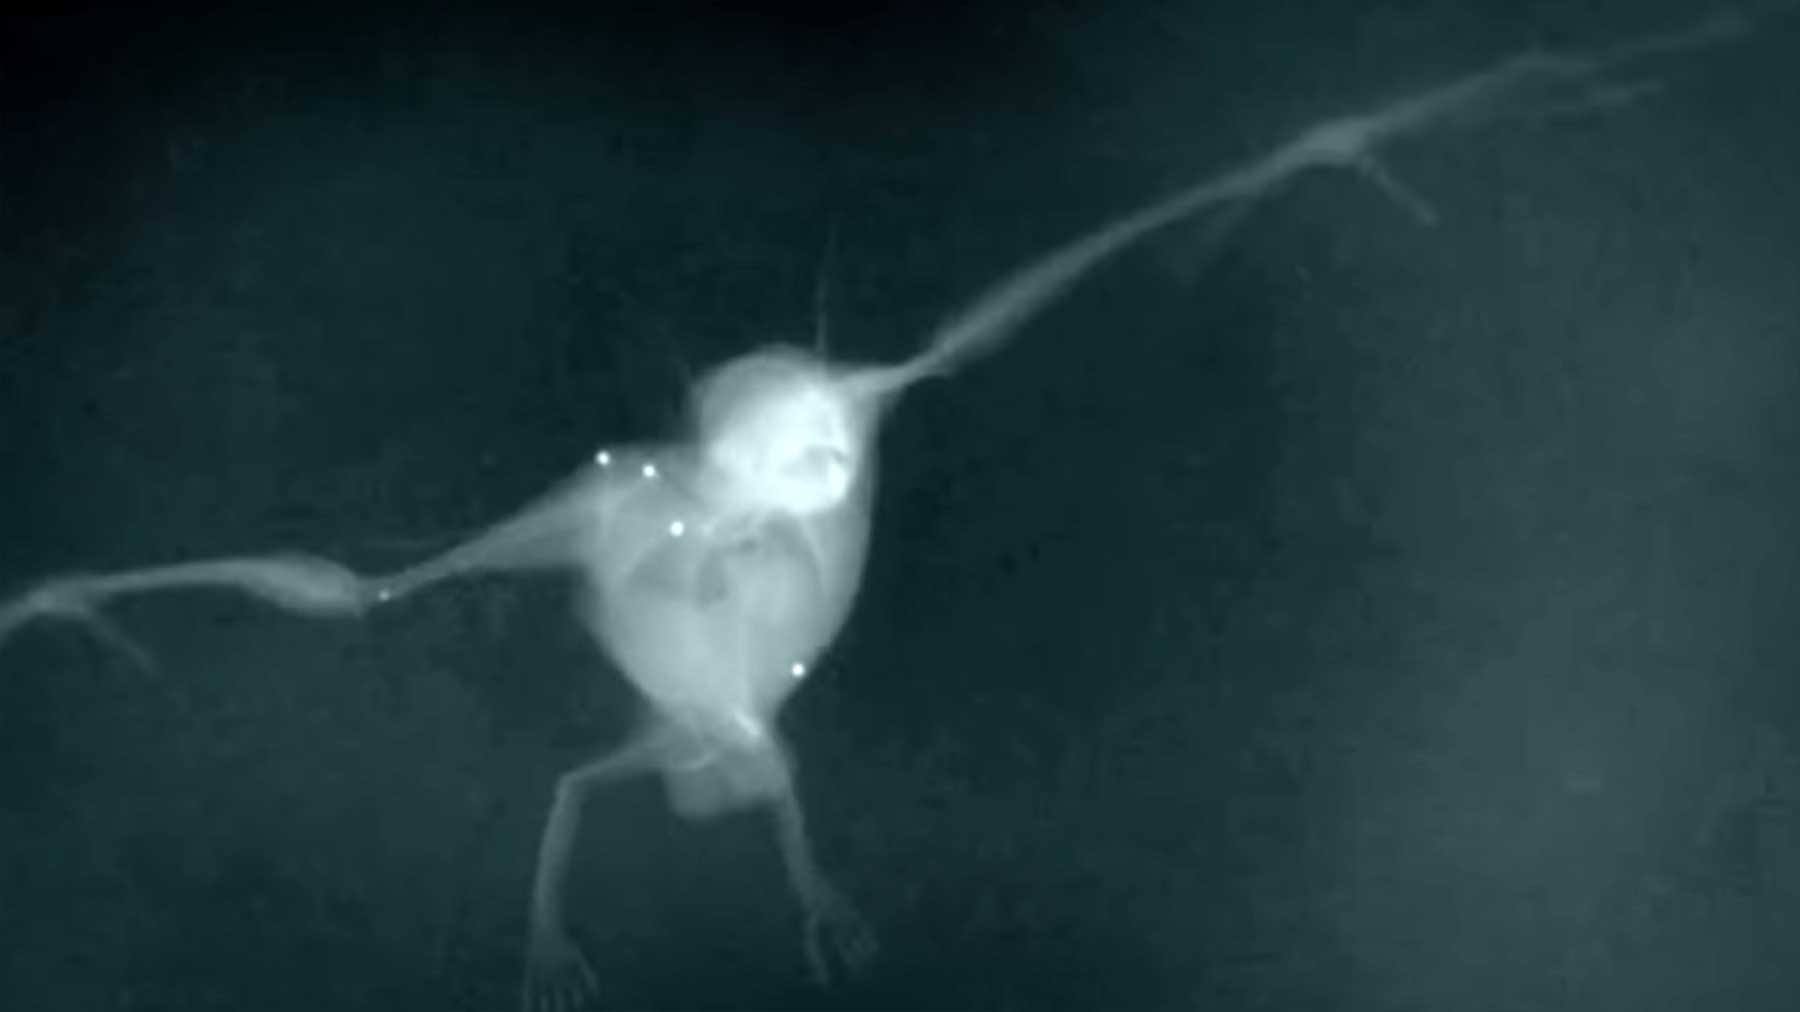 Fledermausflug in Zeitlupen-Röntgenaufnahmen fledermausflug-in-superzeitlupe-geroentgt 